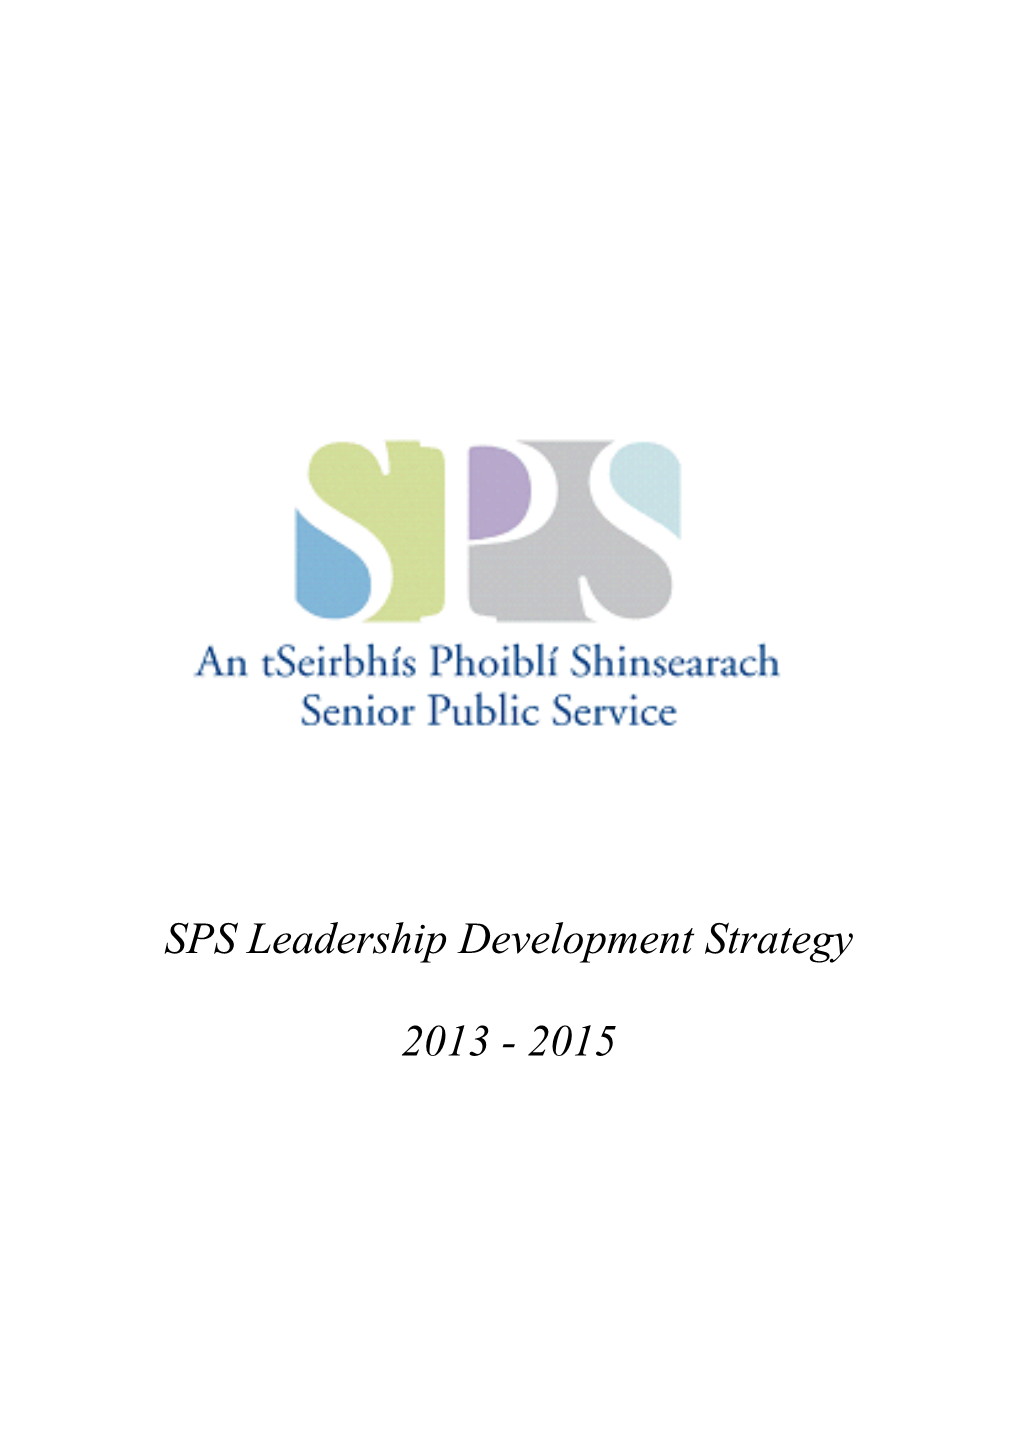 SPS Leadership Development Strategy